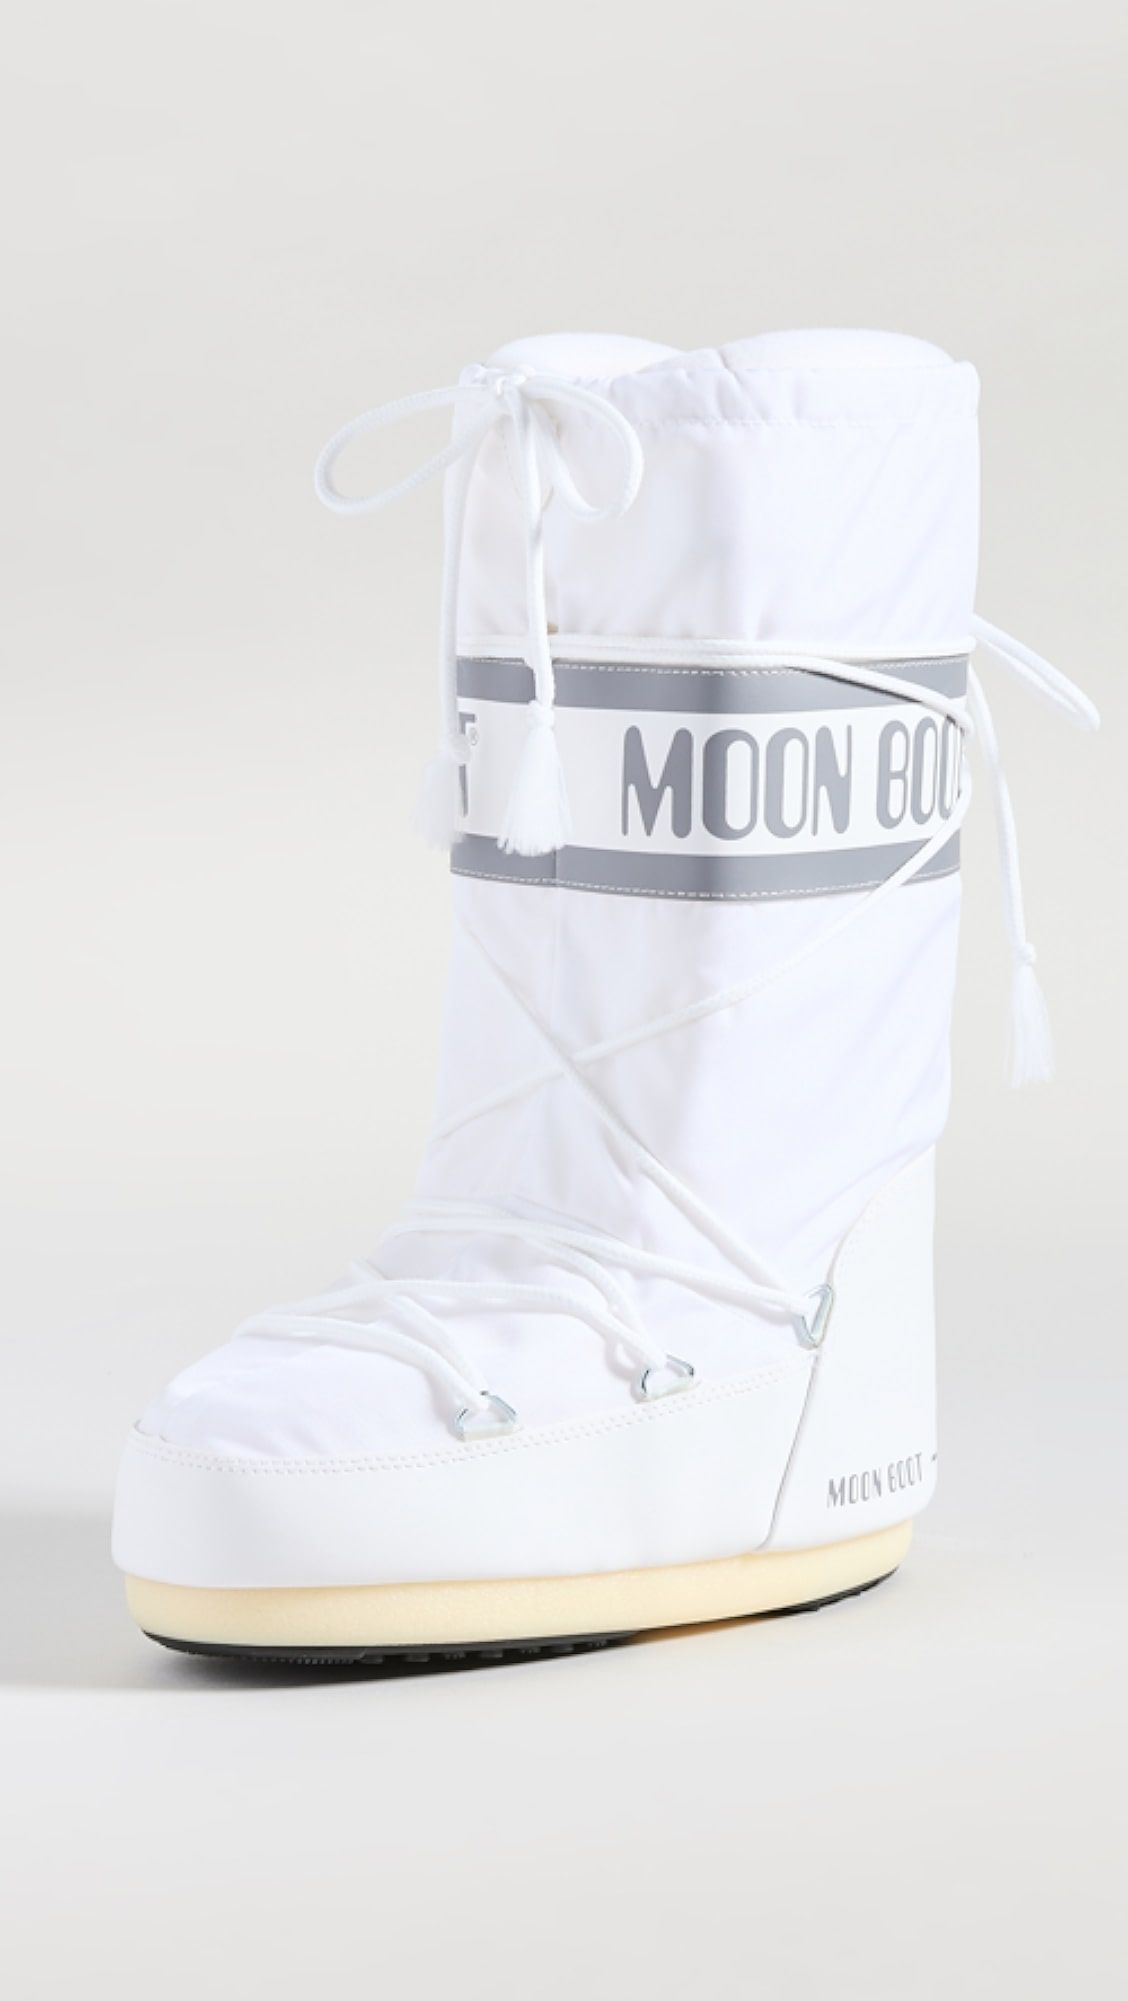 Moon Boot | Shopbop